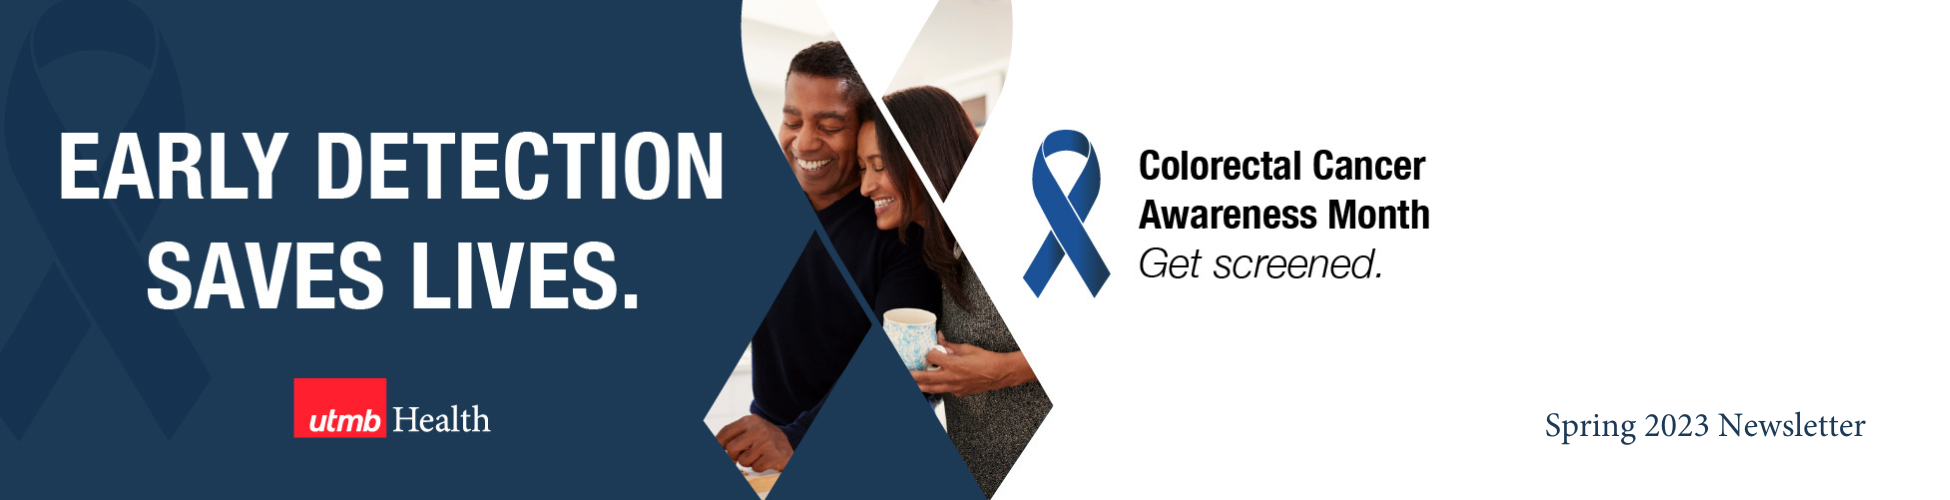 Colorectal Cancer Awareness Month, Dept of Surgery newsletter spring 2023